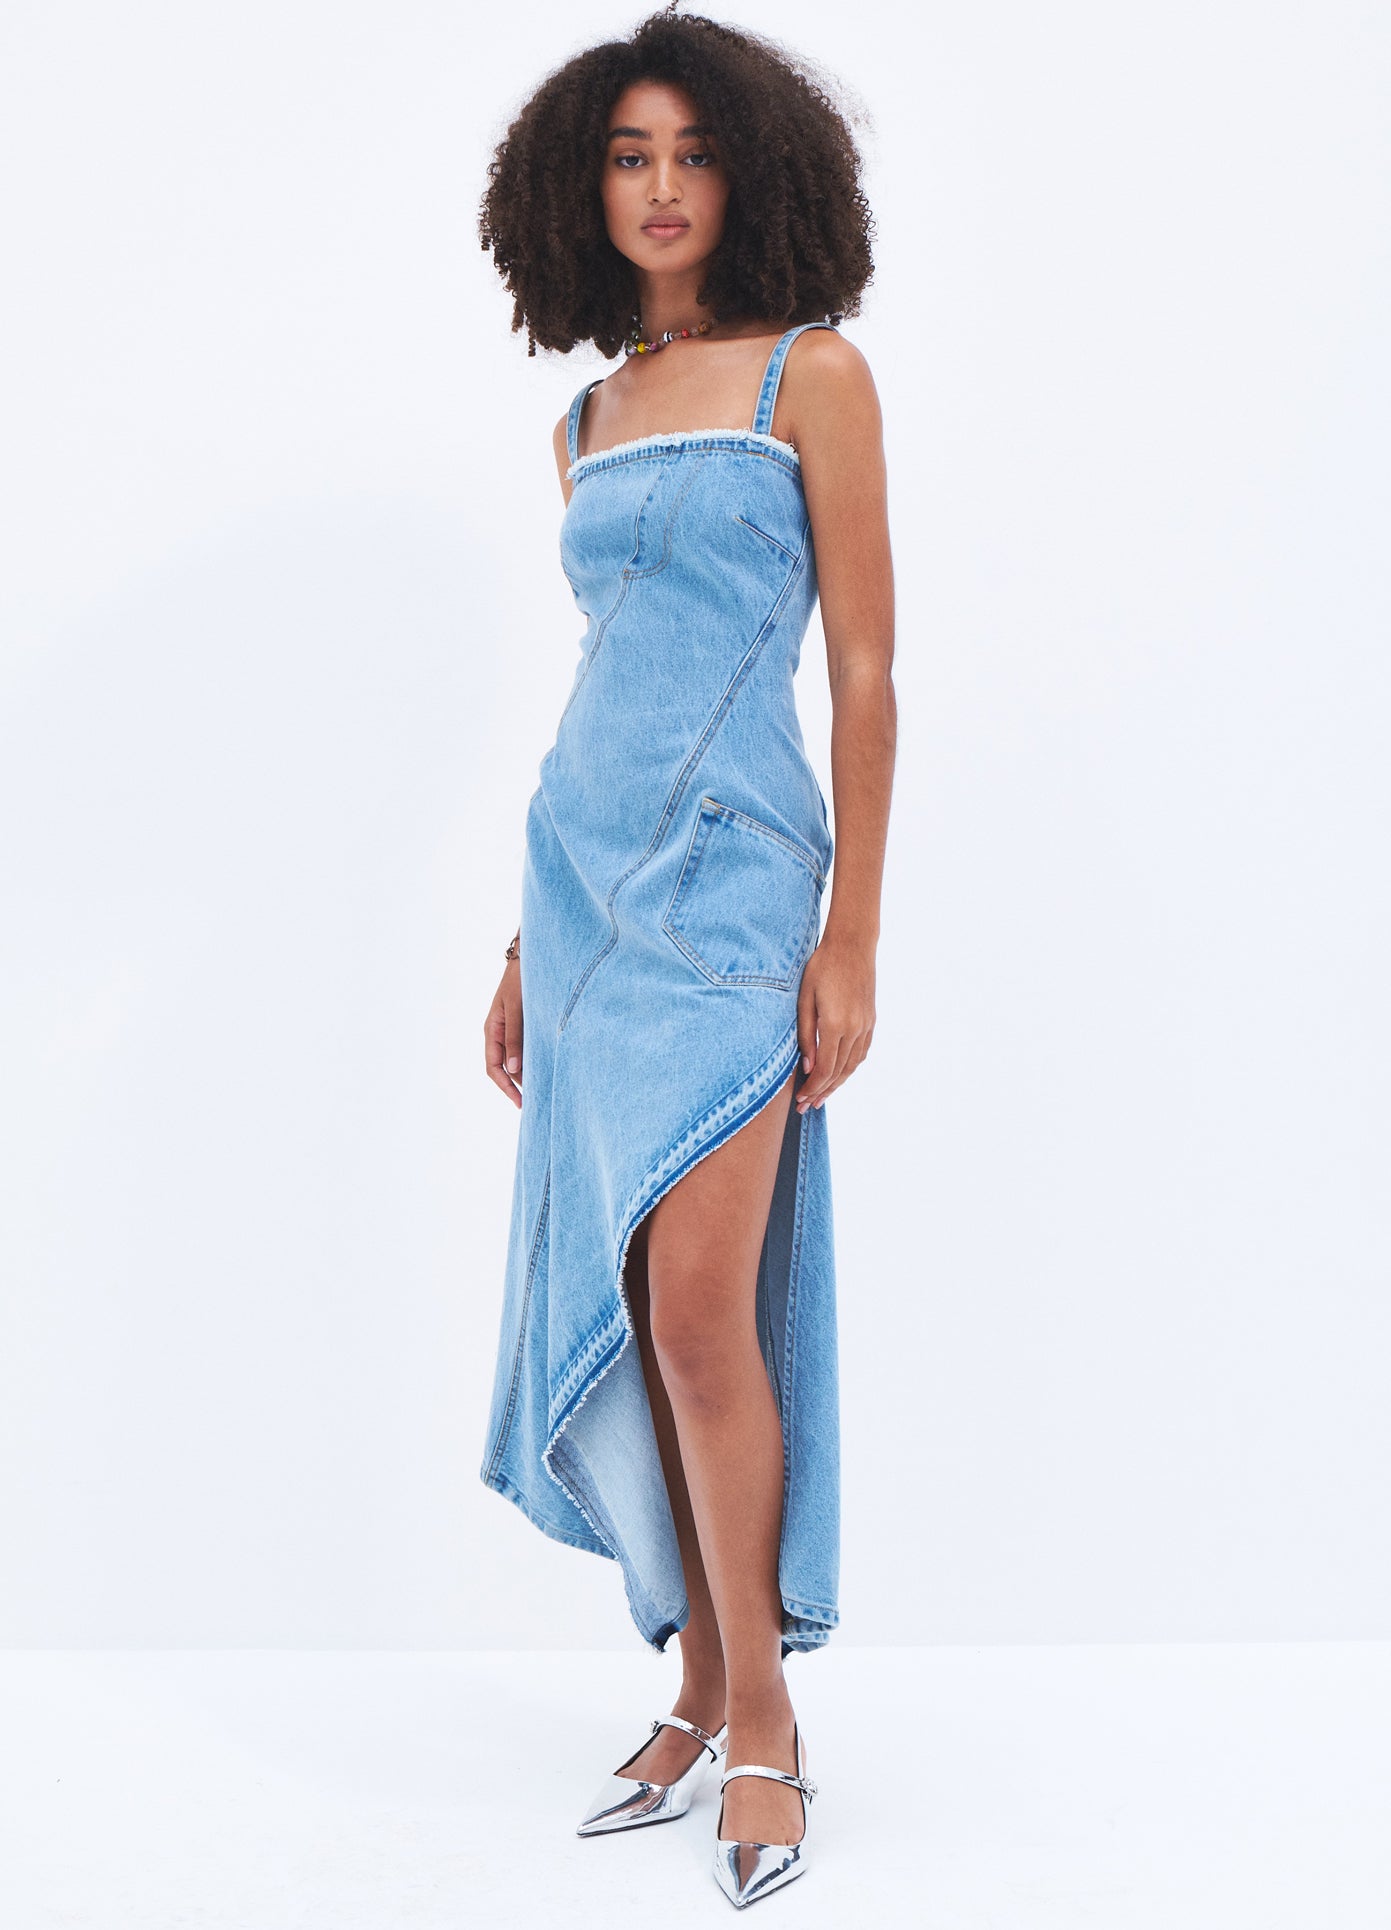 MONSE Twisted Denim Dress in Indigo on model full front view